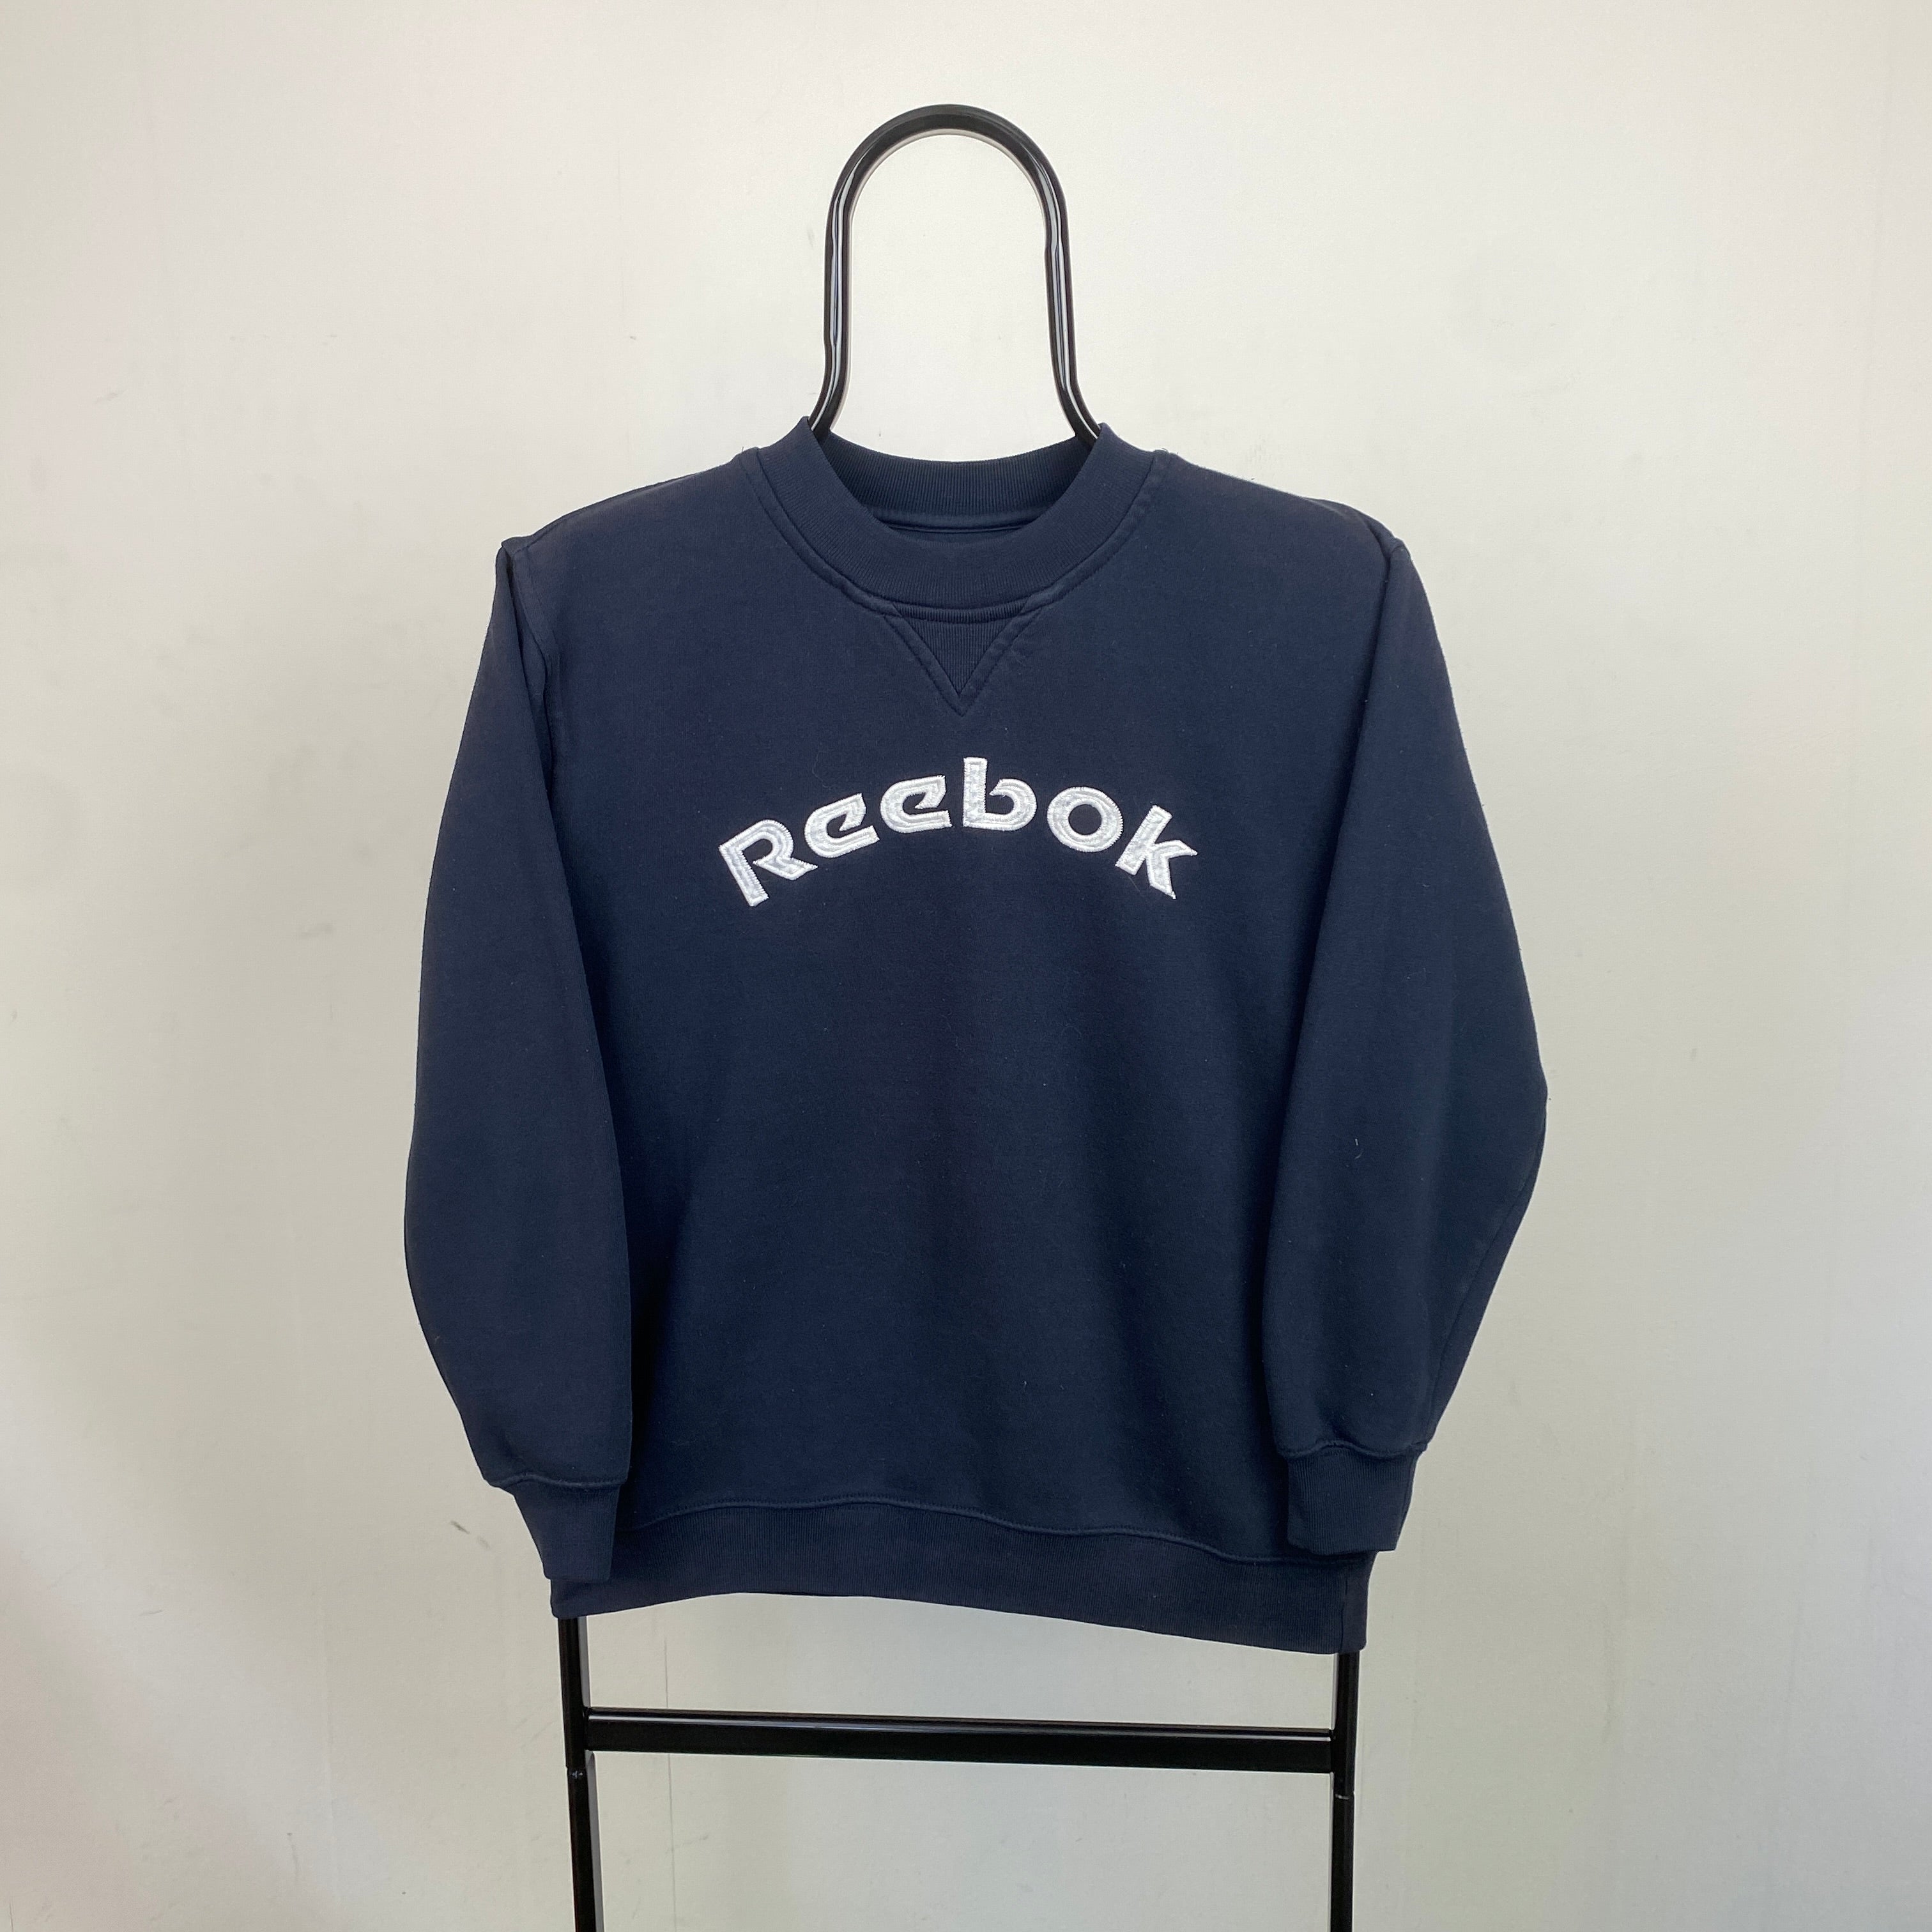 Retro Reebok Sweatshirt Blue Small